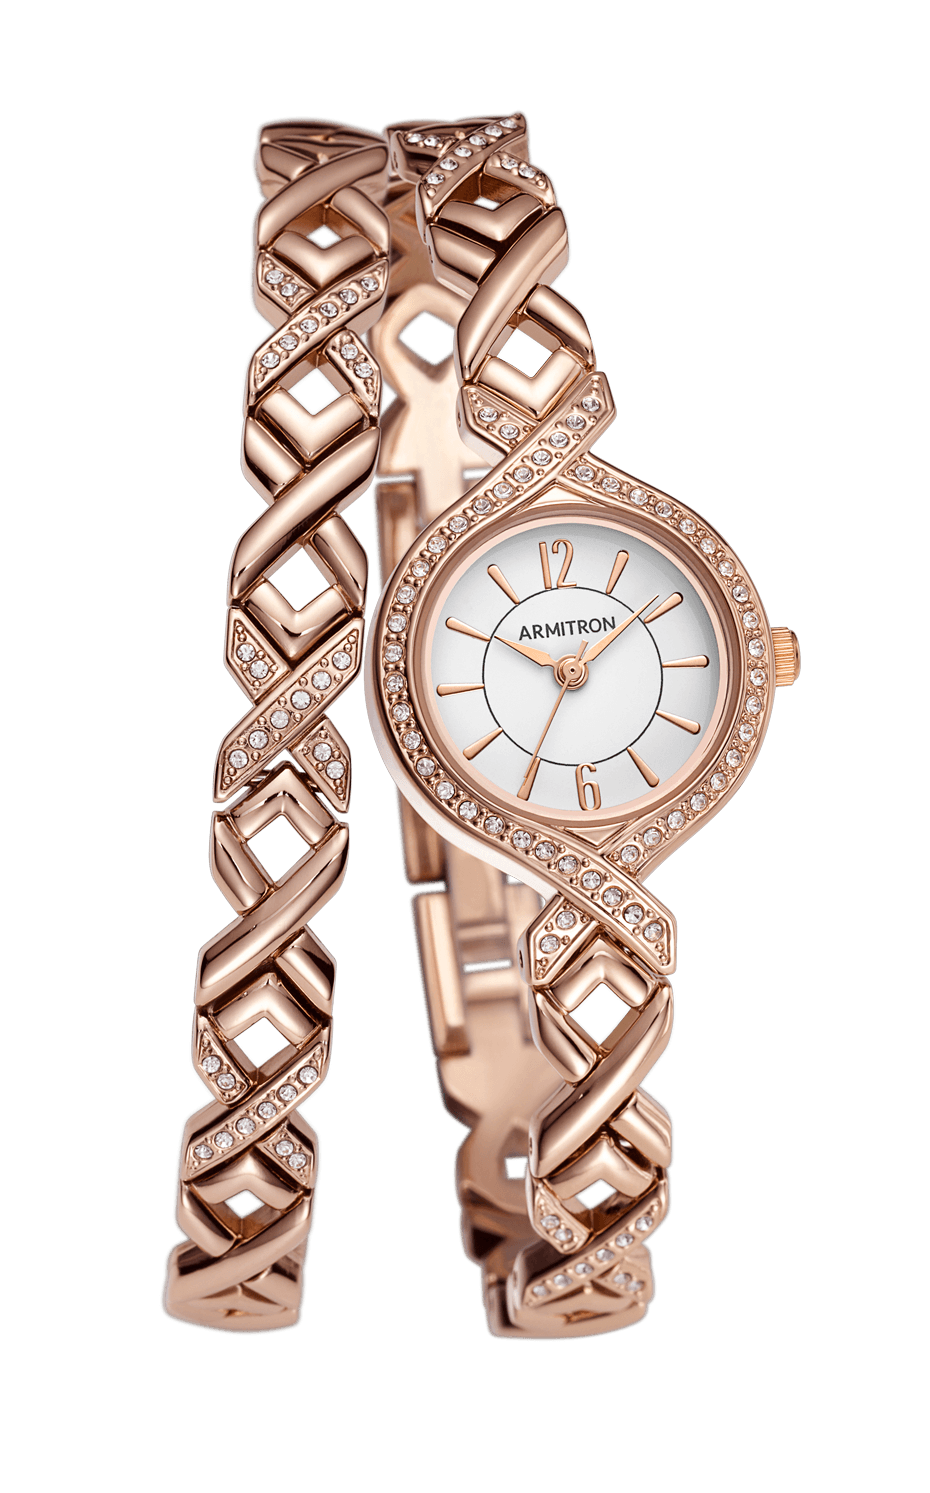 Armitron Women’s Swarovski Crystal-Accented Watch and Bracelet Set